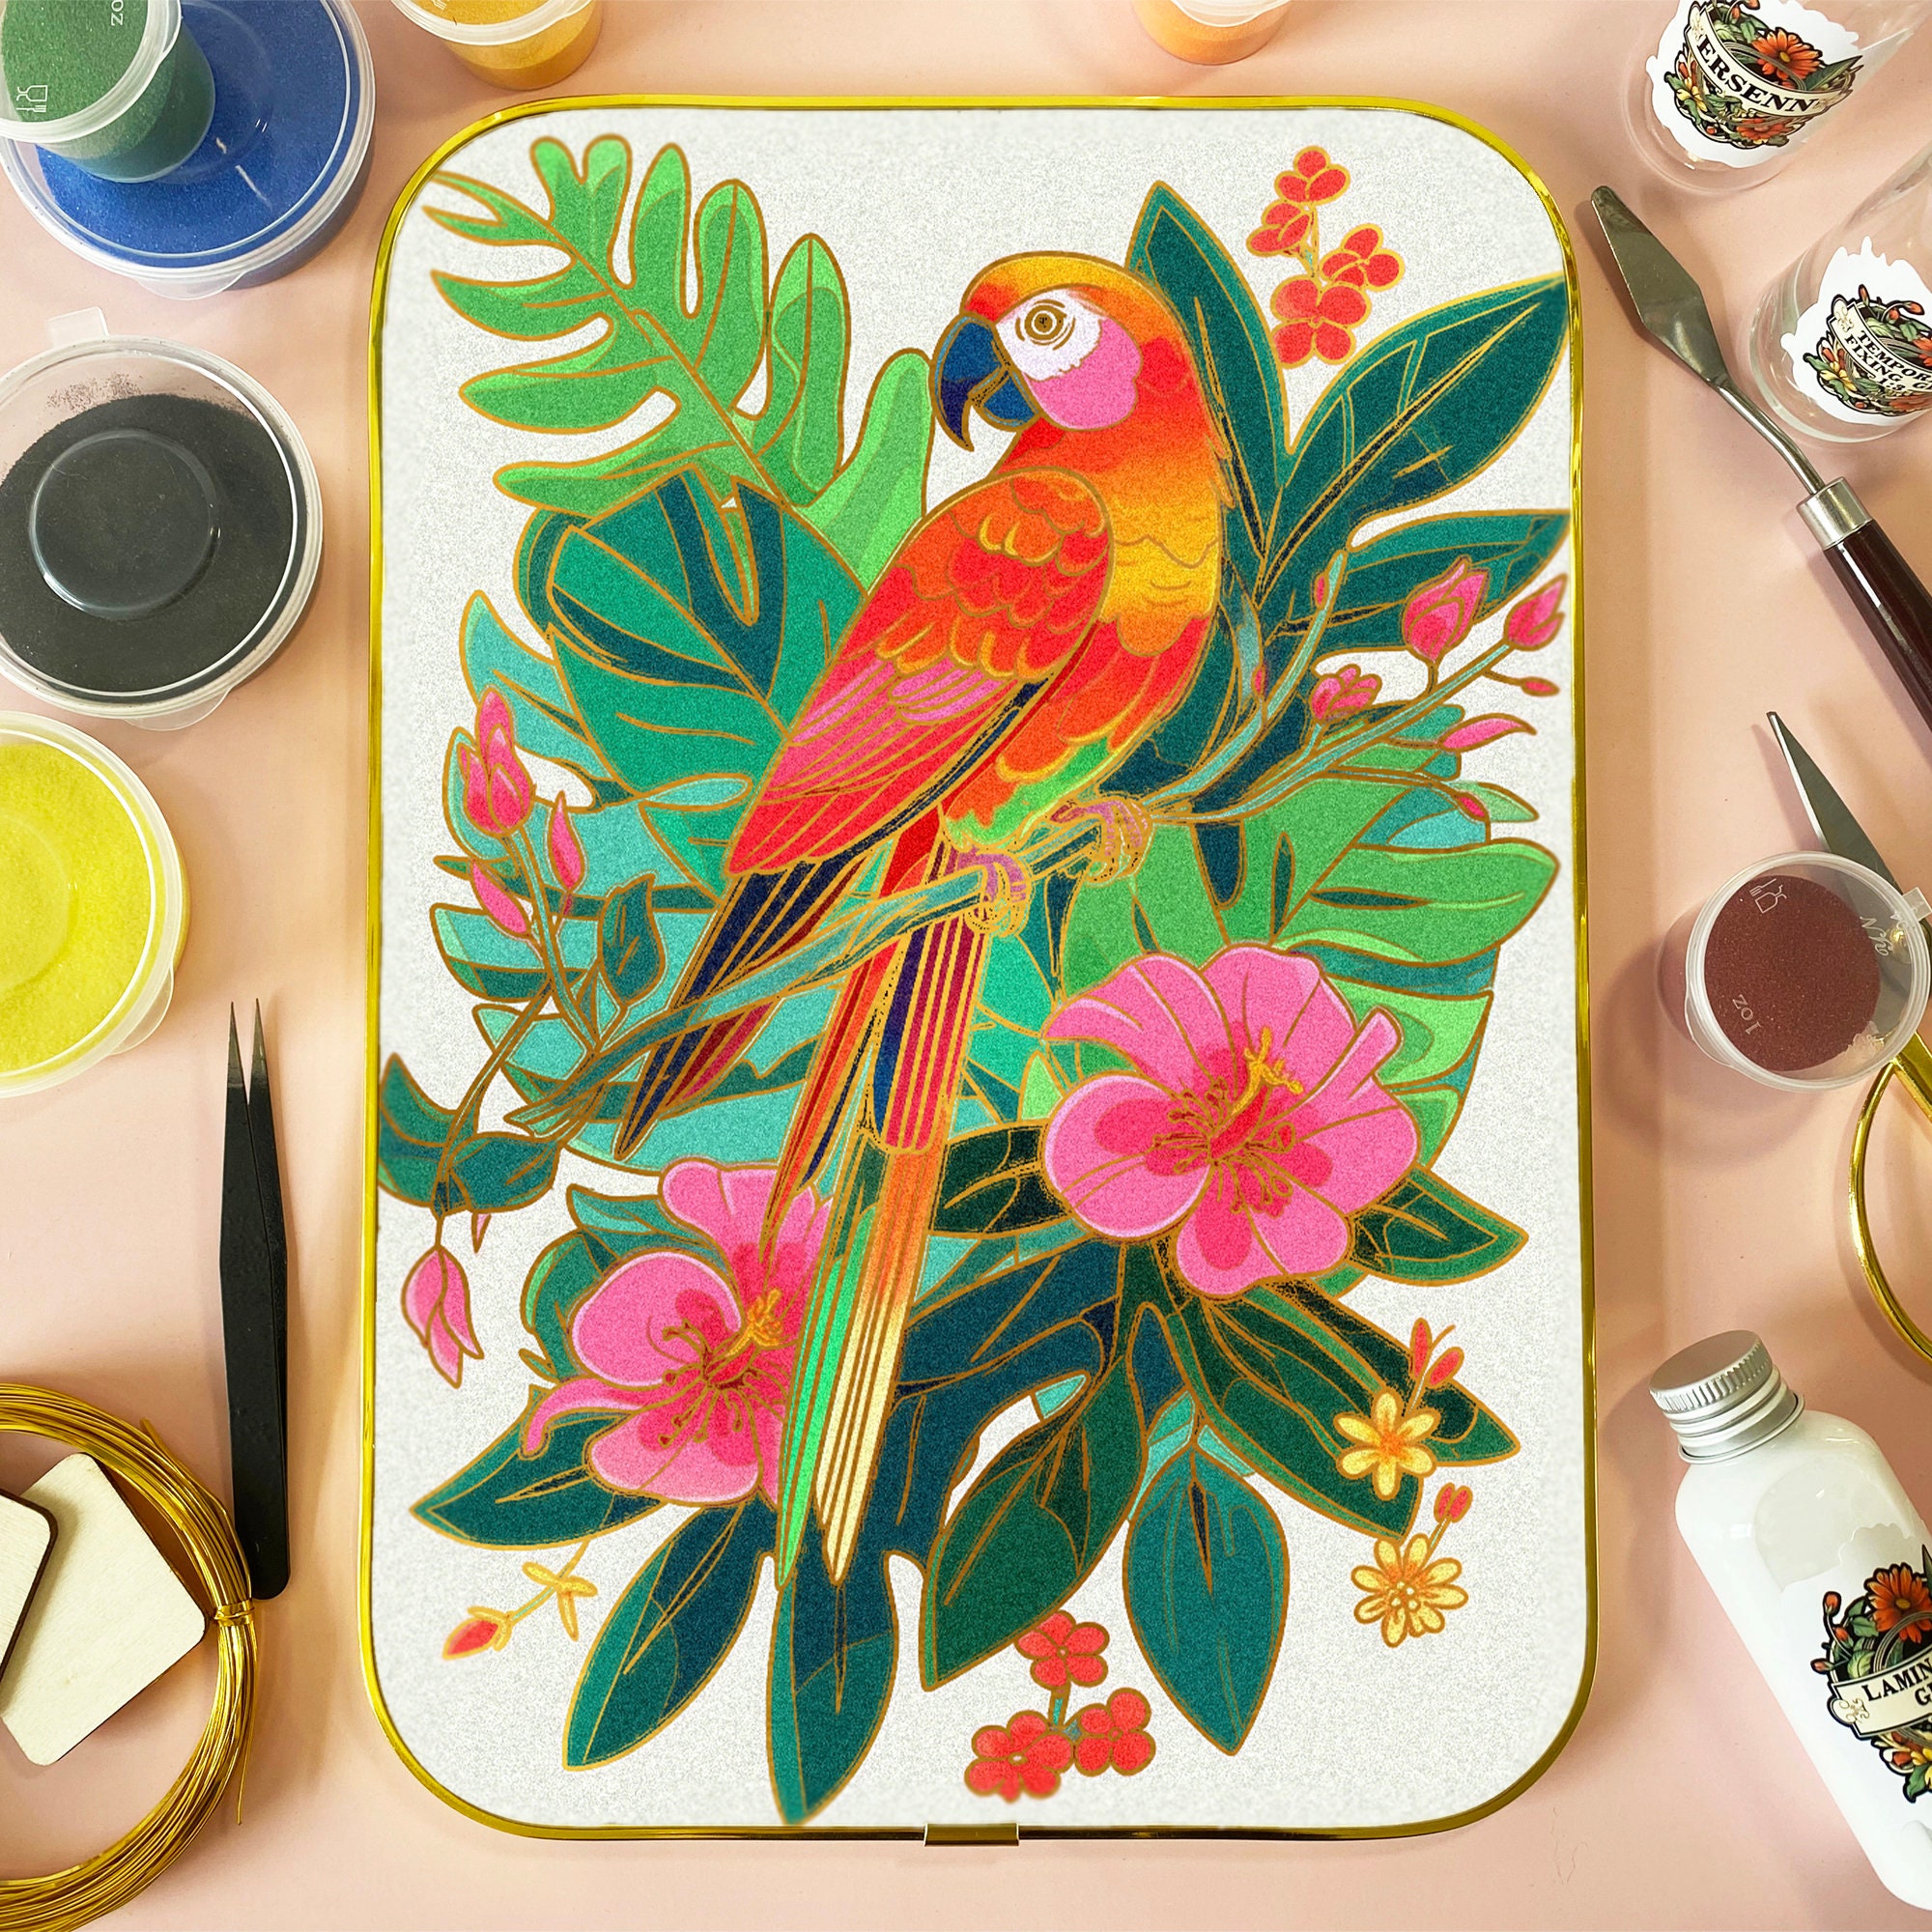 Peacocks- DIY Cloisonne Enamel Painting Art Kits